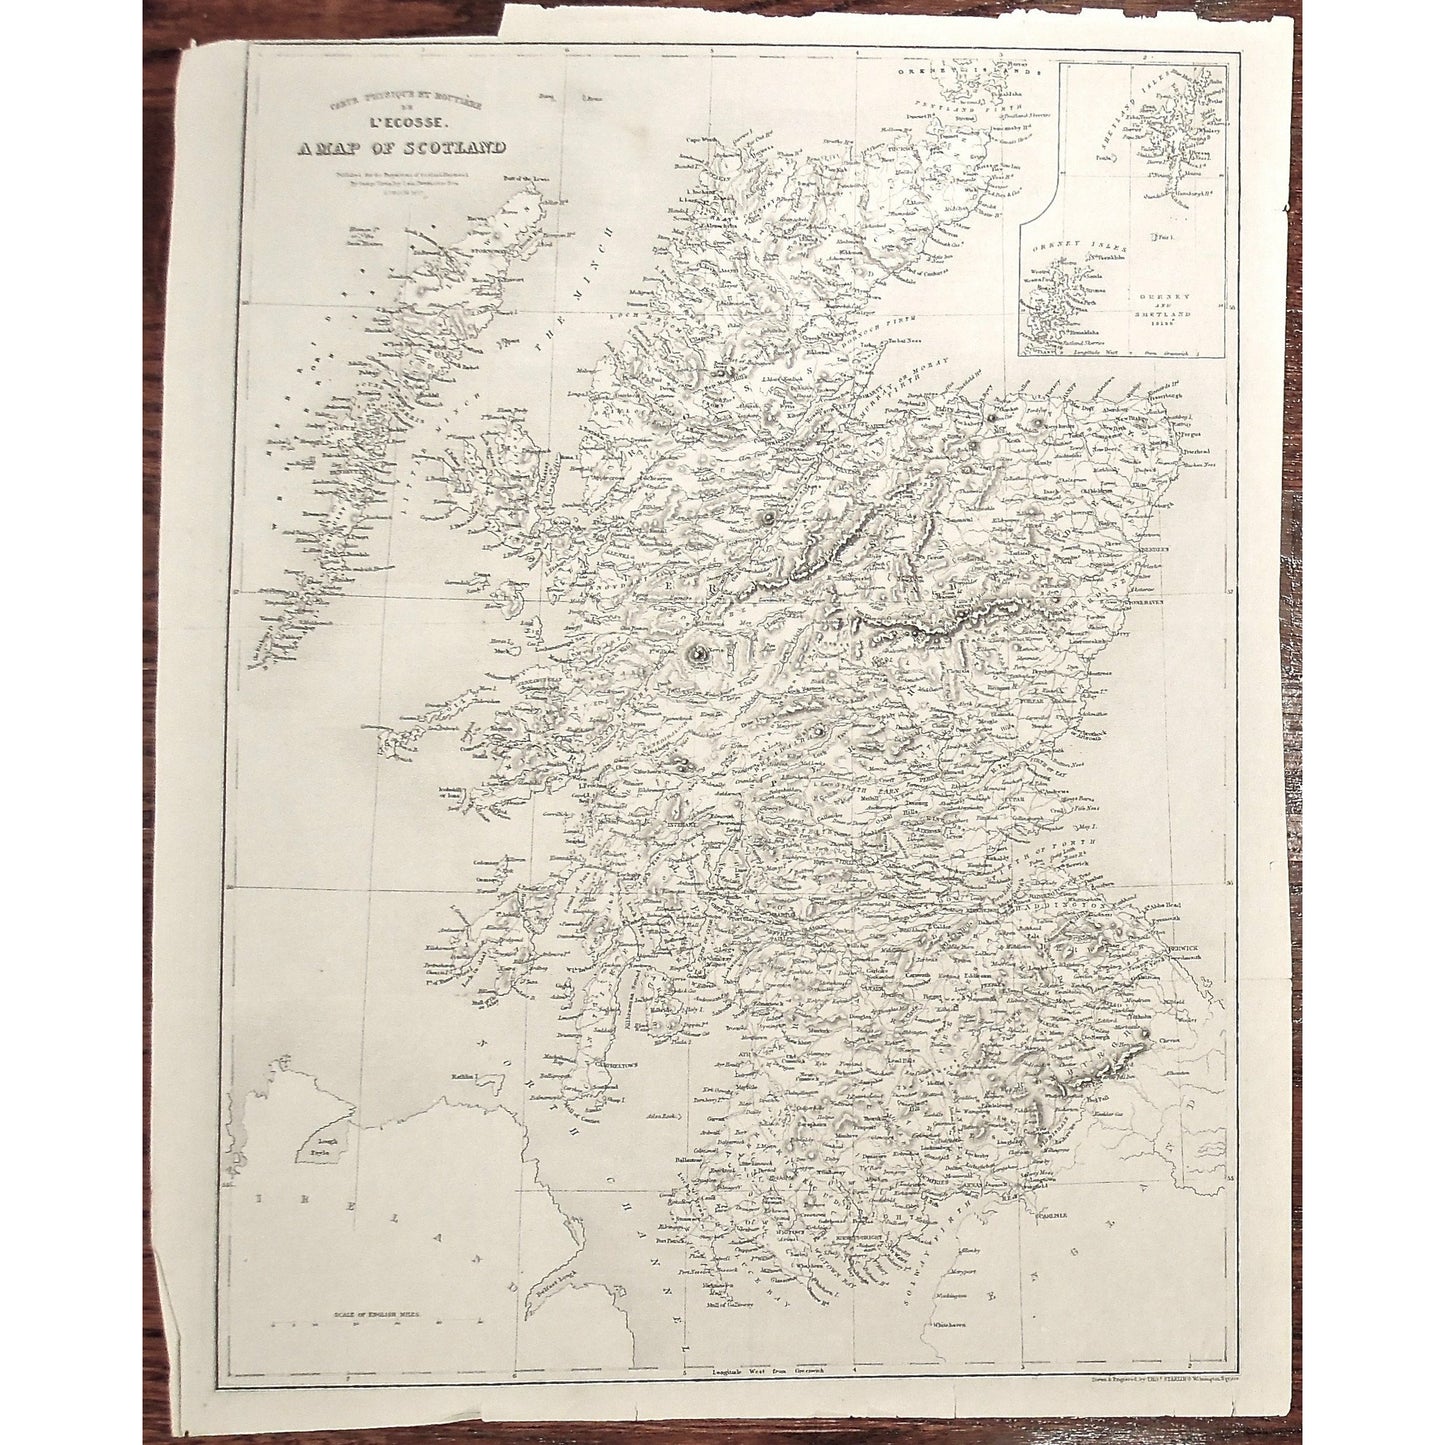 L'Ecosse, Scotland, Map, Scottish, Carte, Minch, Shetland Isles, Shetland Islands, Inverness, Aberdeen, Ross, Skye, Argyle, Ayre, North Channel, Scottish, Scottish prints, Scottish Maps, Antique Maps, Vintage Maps, Old Maps, Maps of Scotland, artwork